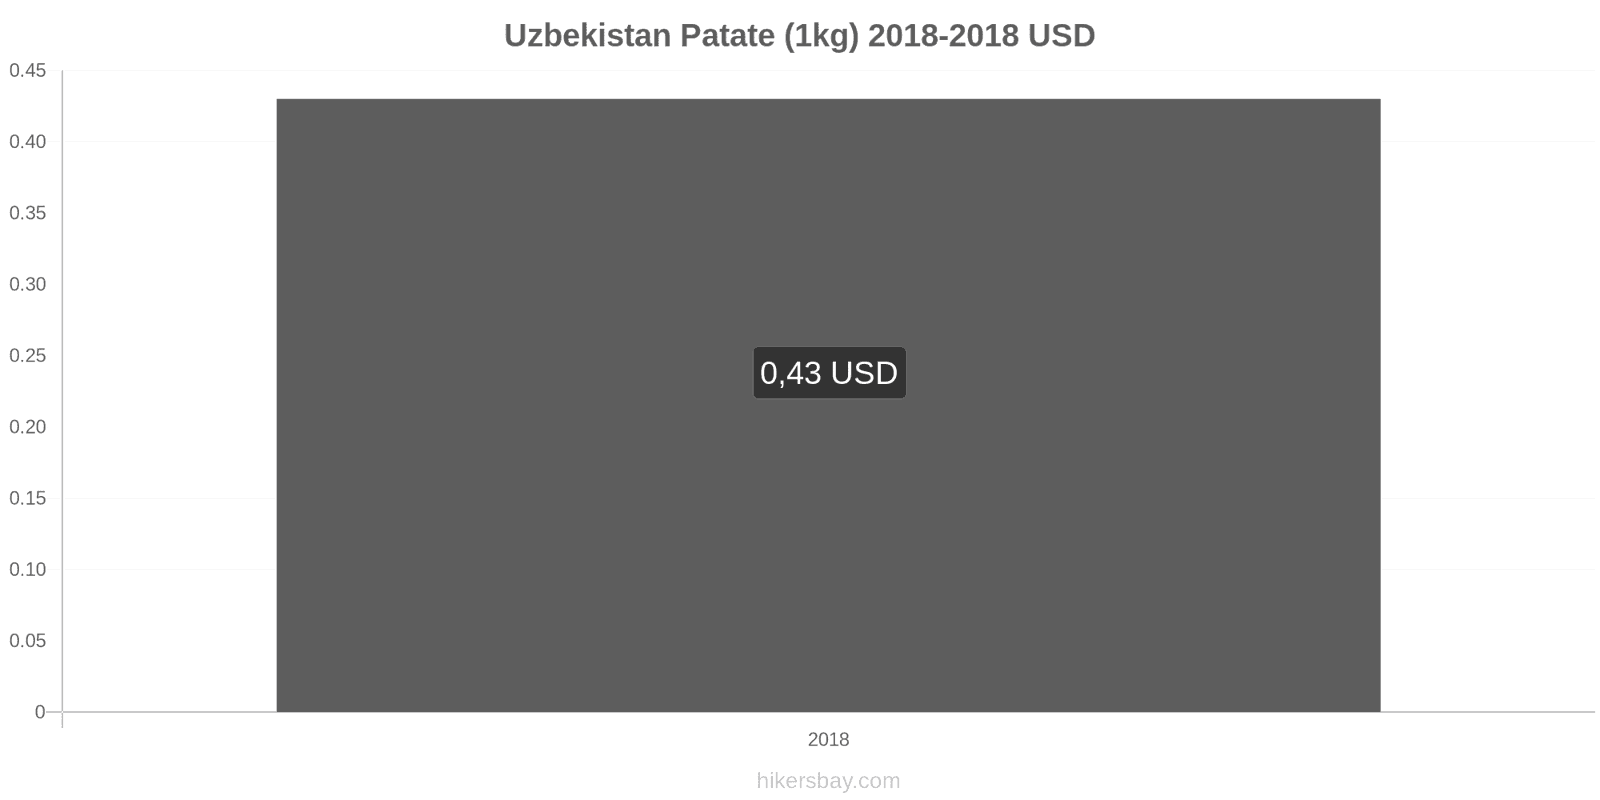 Uzbekistan cambi di prezzo Patate (1kg) hikersbay.com